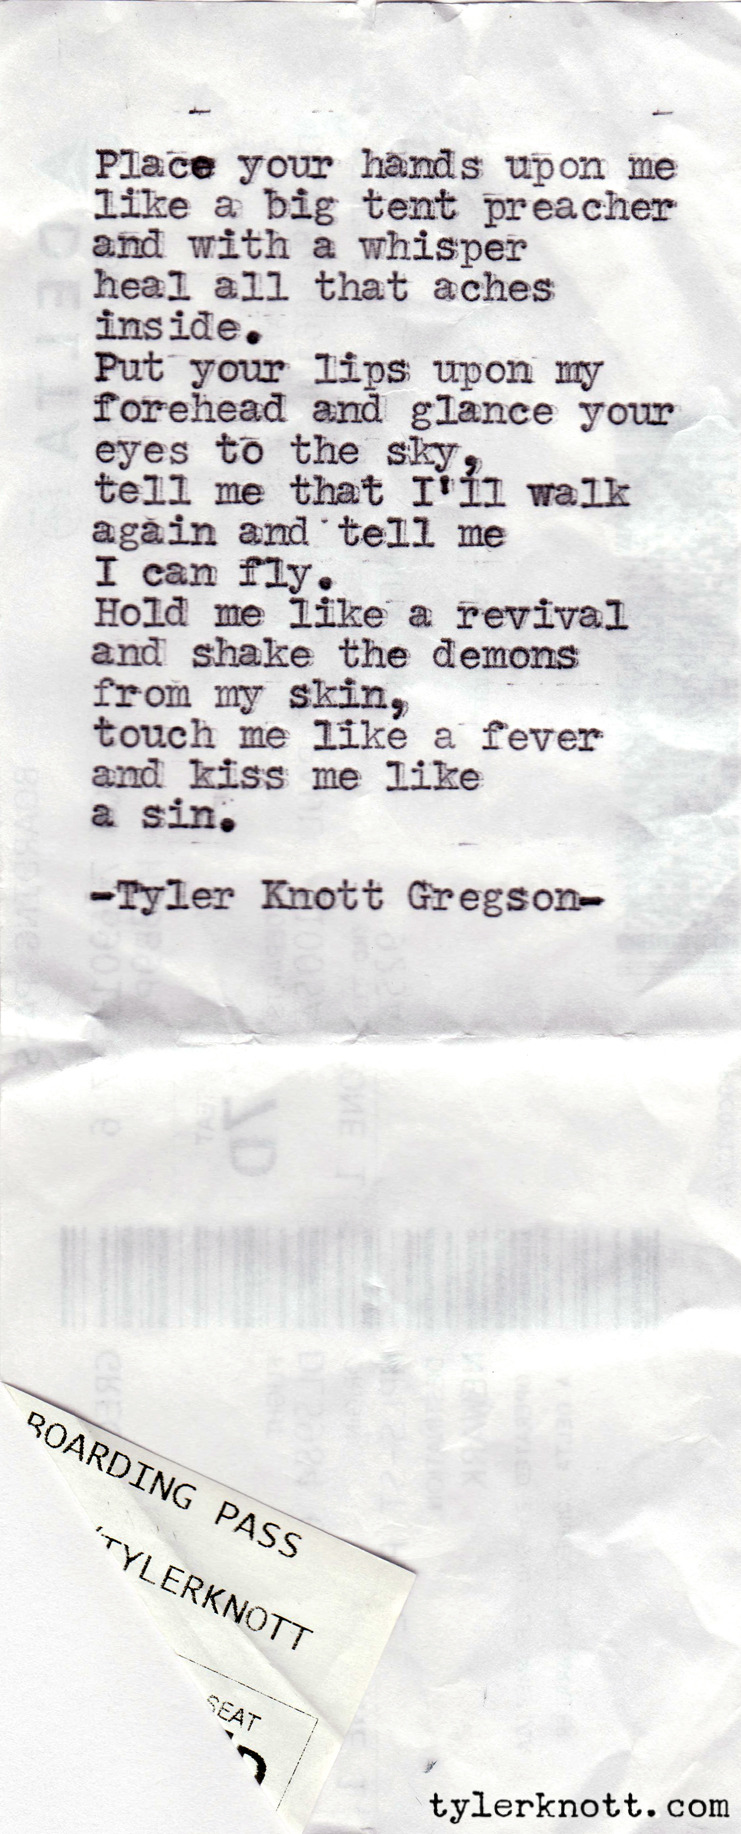 Tyler Knott Gregson — Typewriter Series #111 by Tyler Knott Gregson